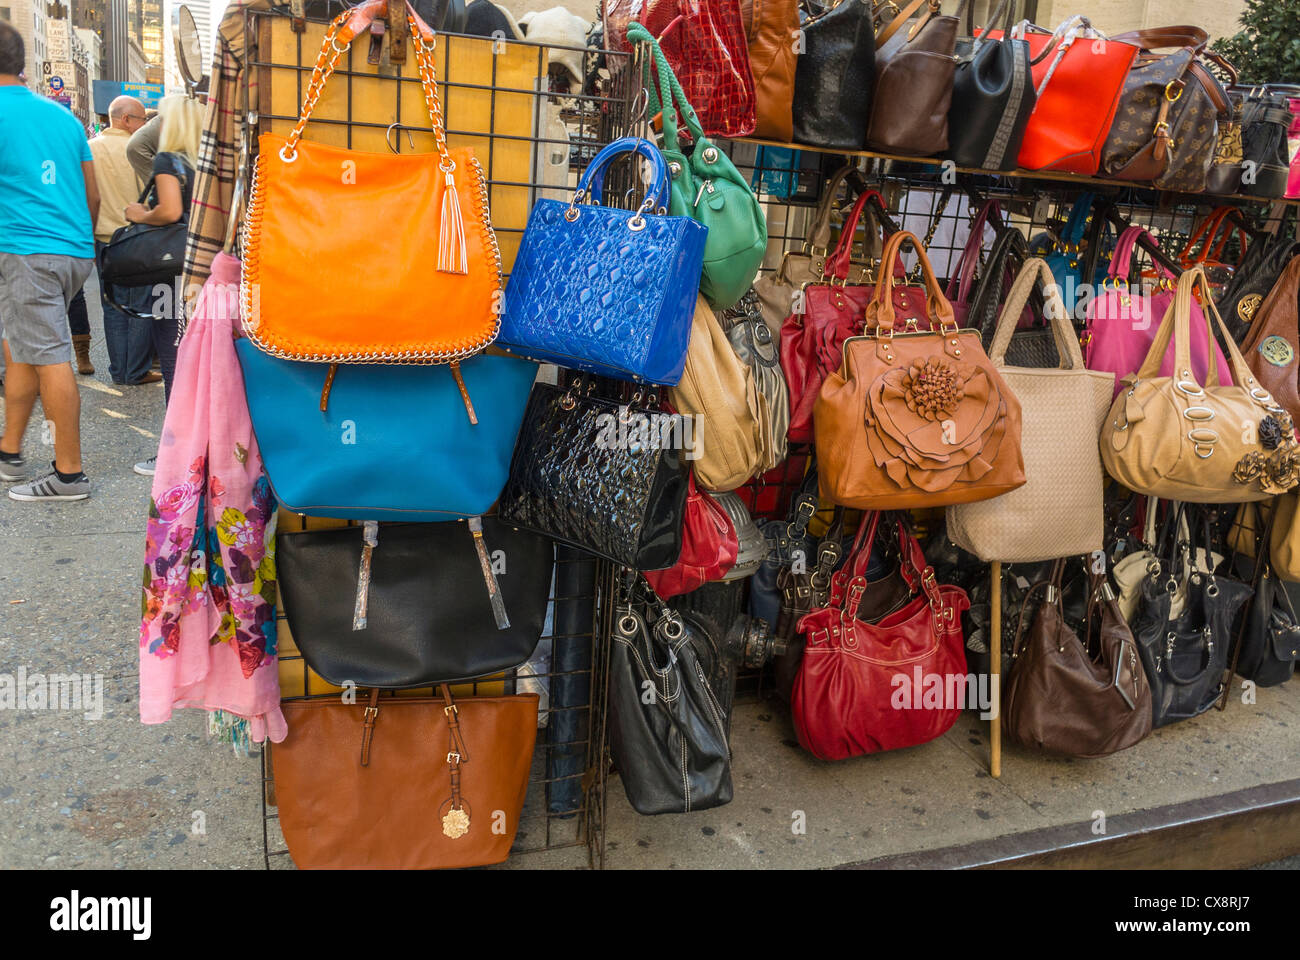 New York Retail Bags Market Assessment | IUCN Water